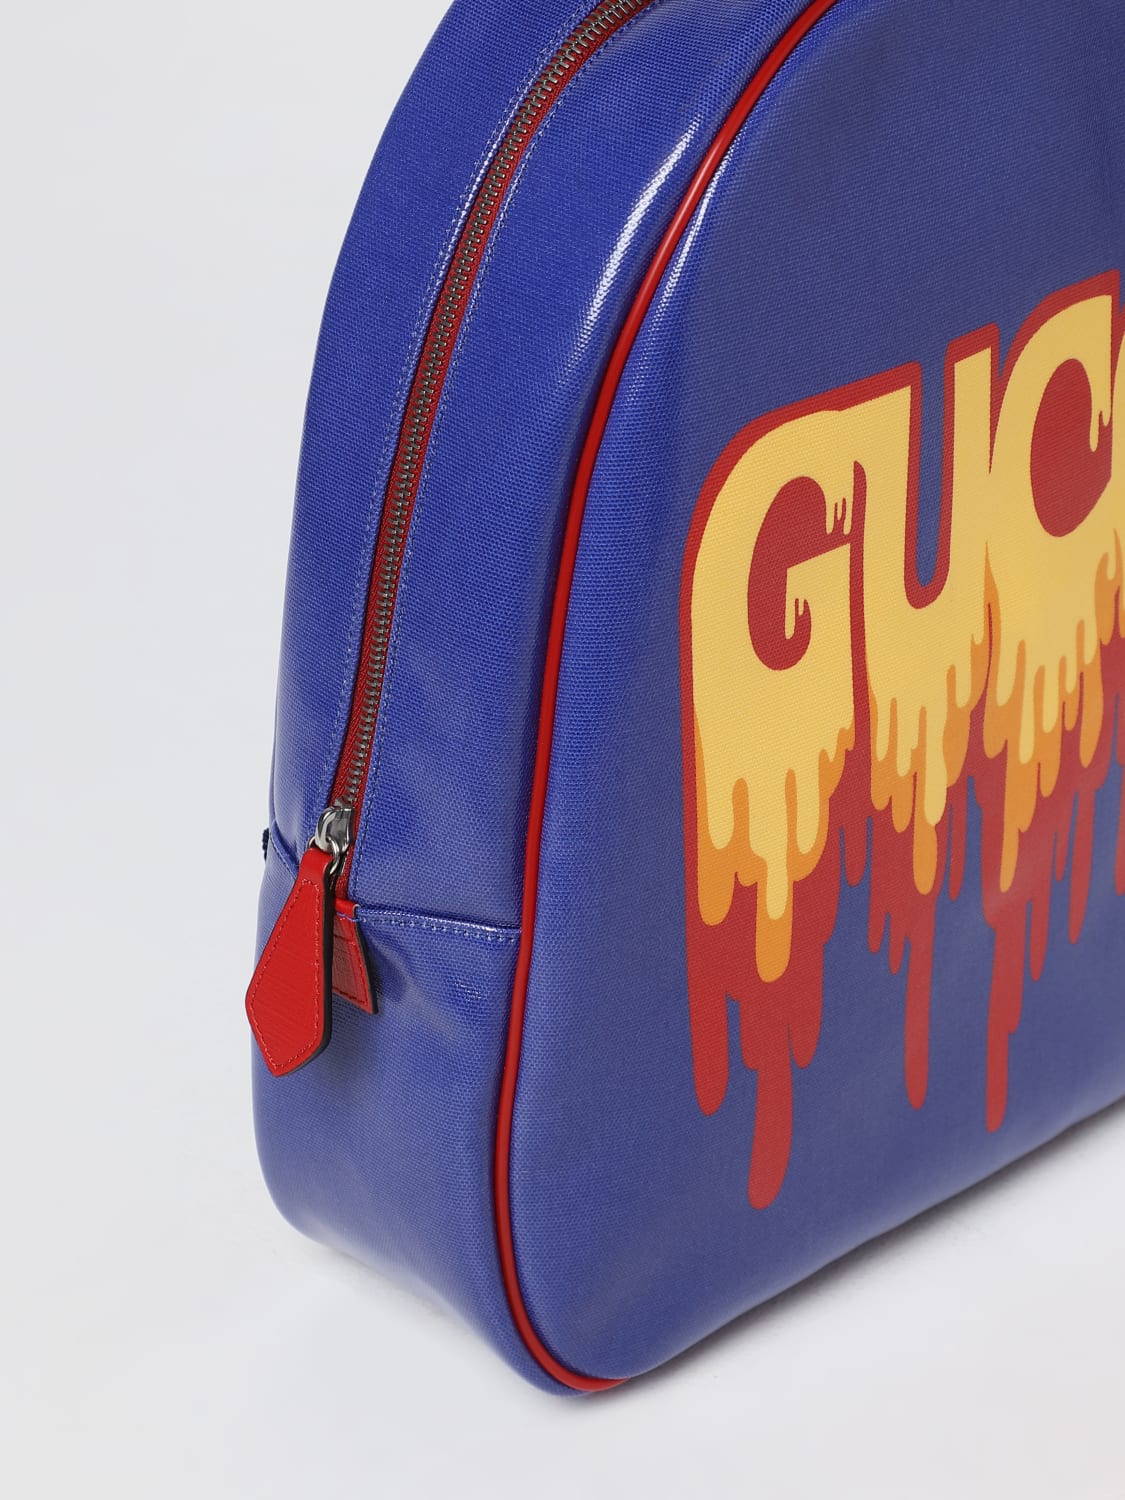 Gucci Men's Backpacks - Bags